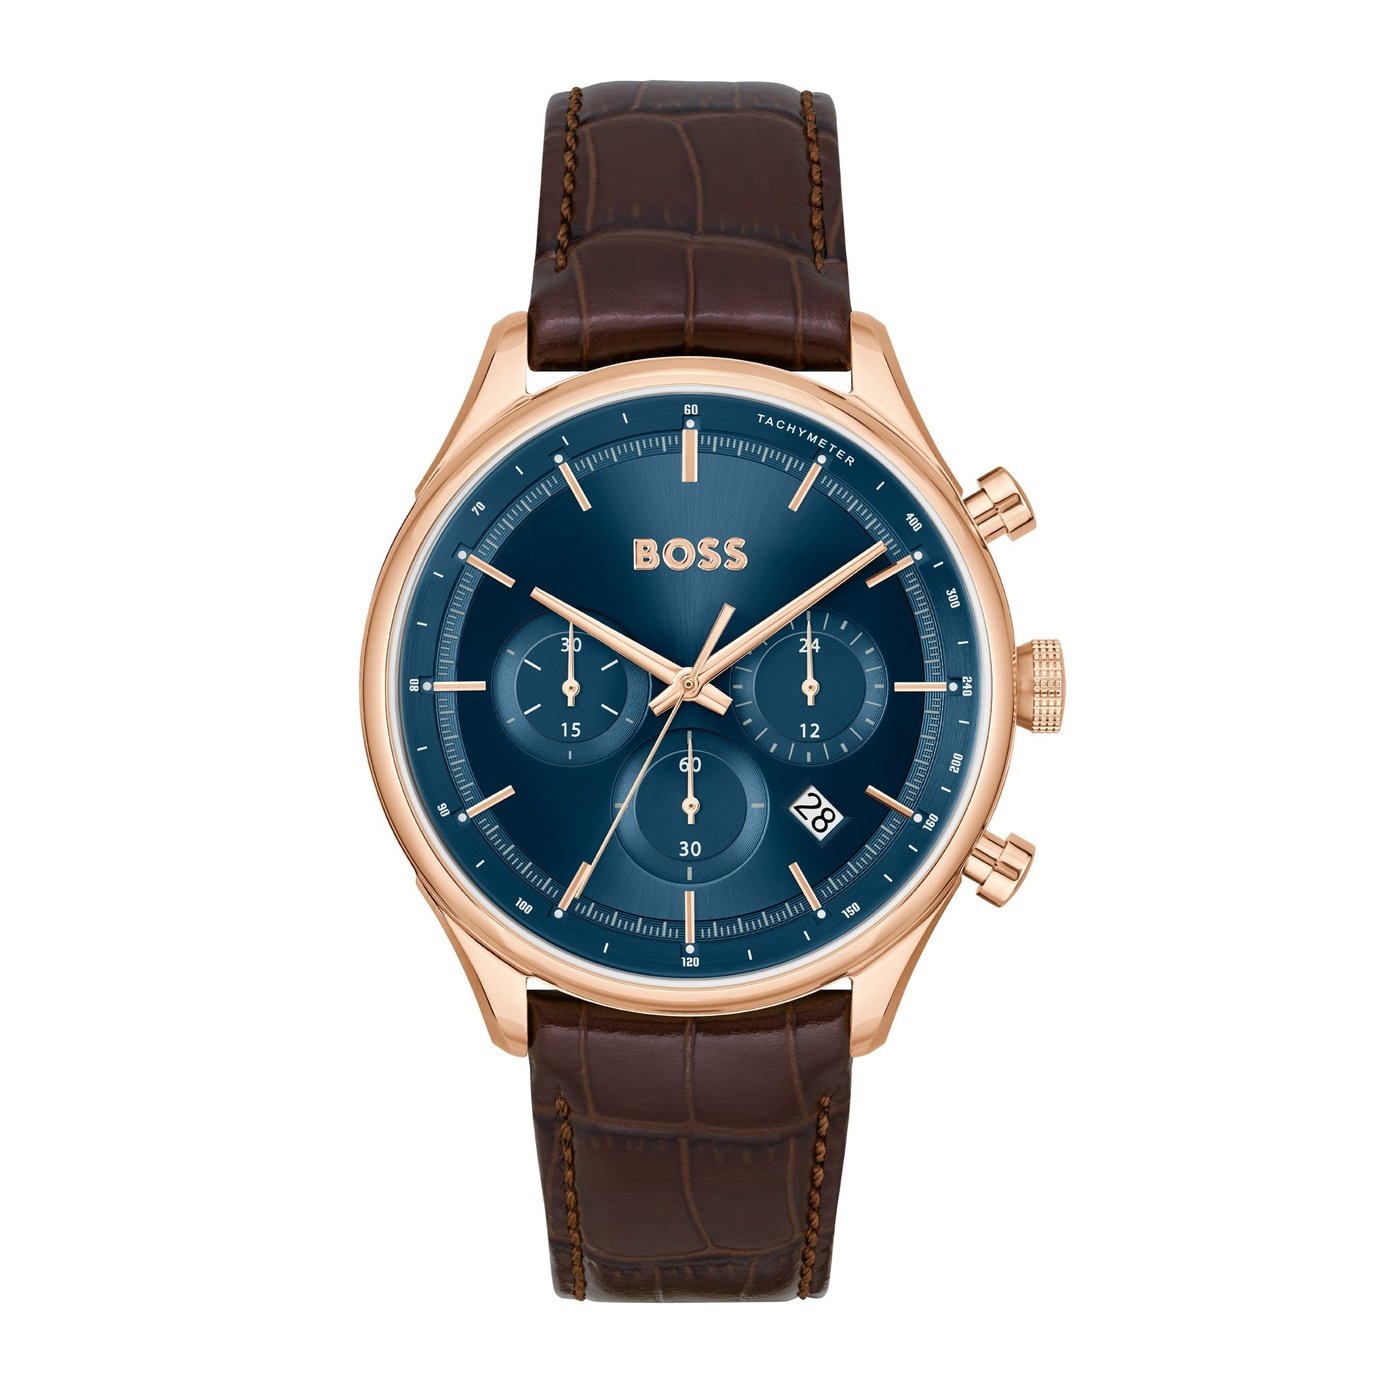 Hugo Boss] Watch Question : r/Watches